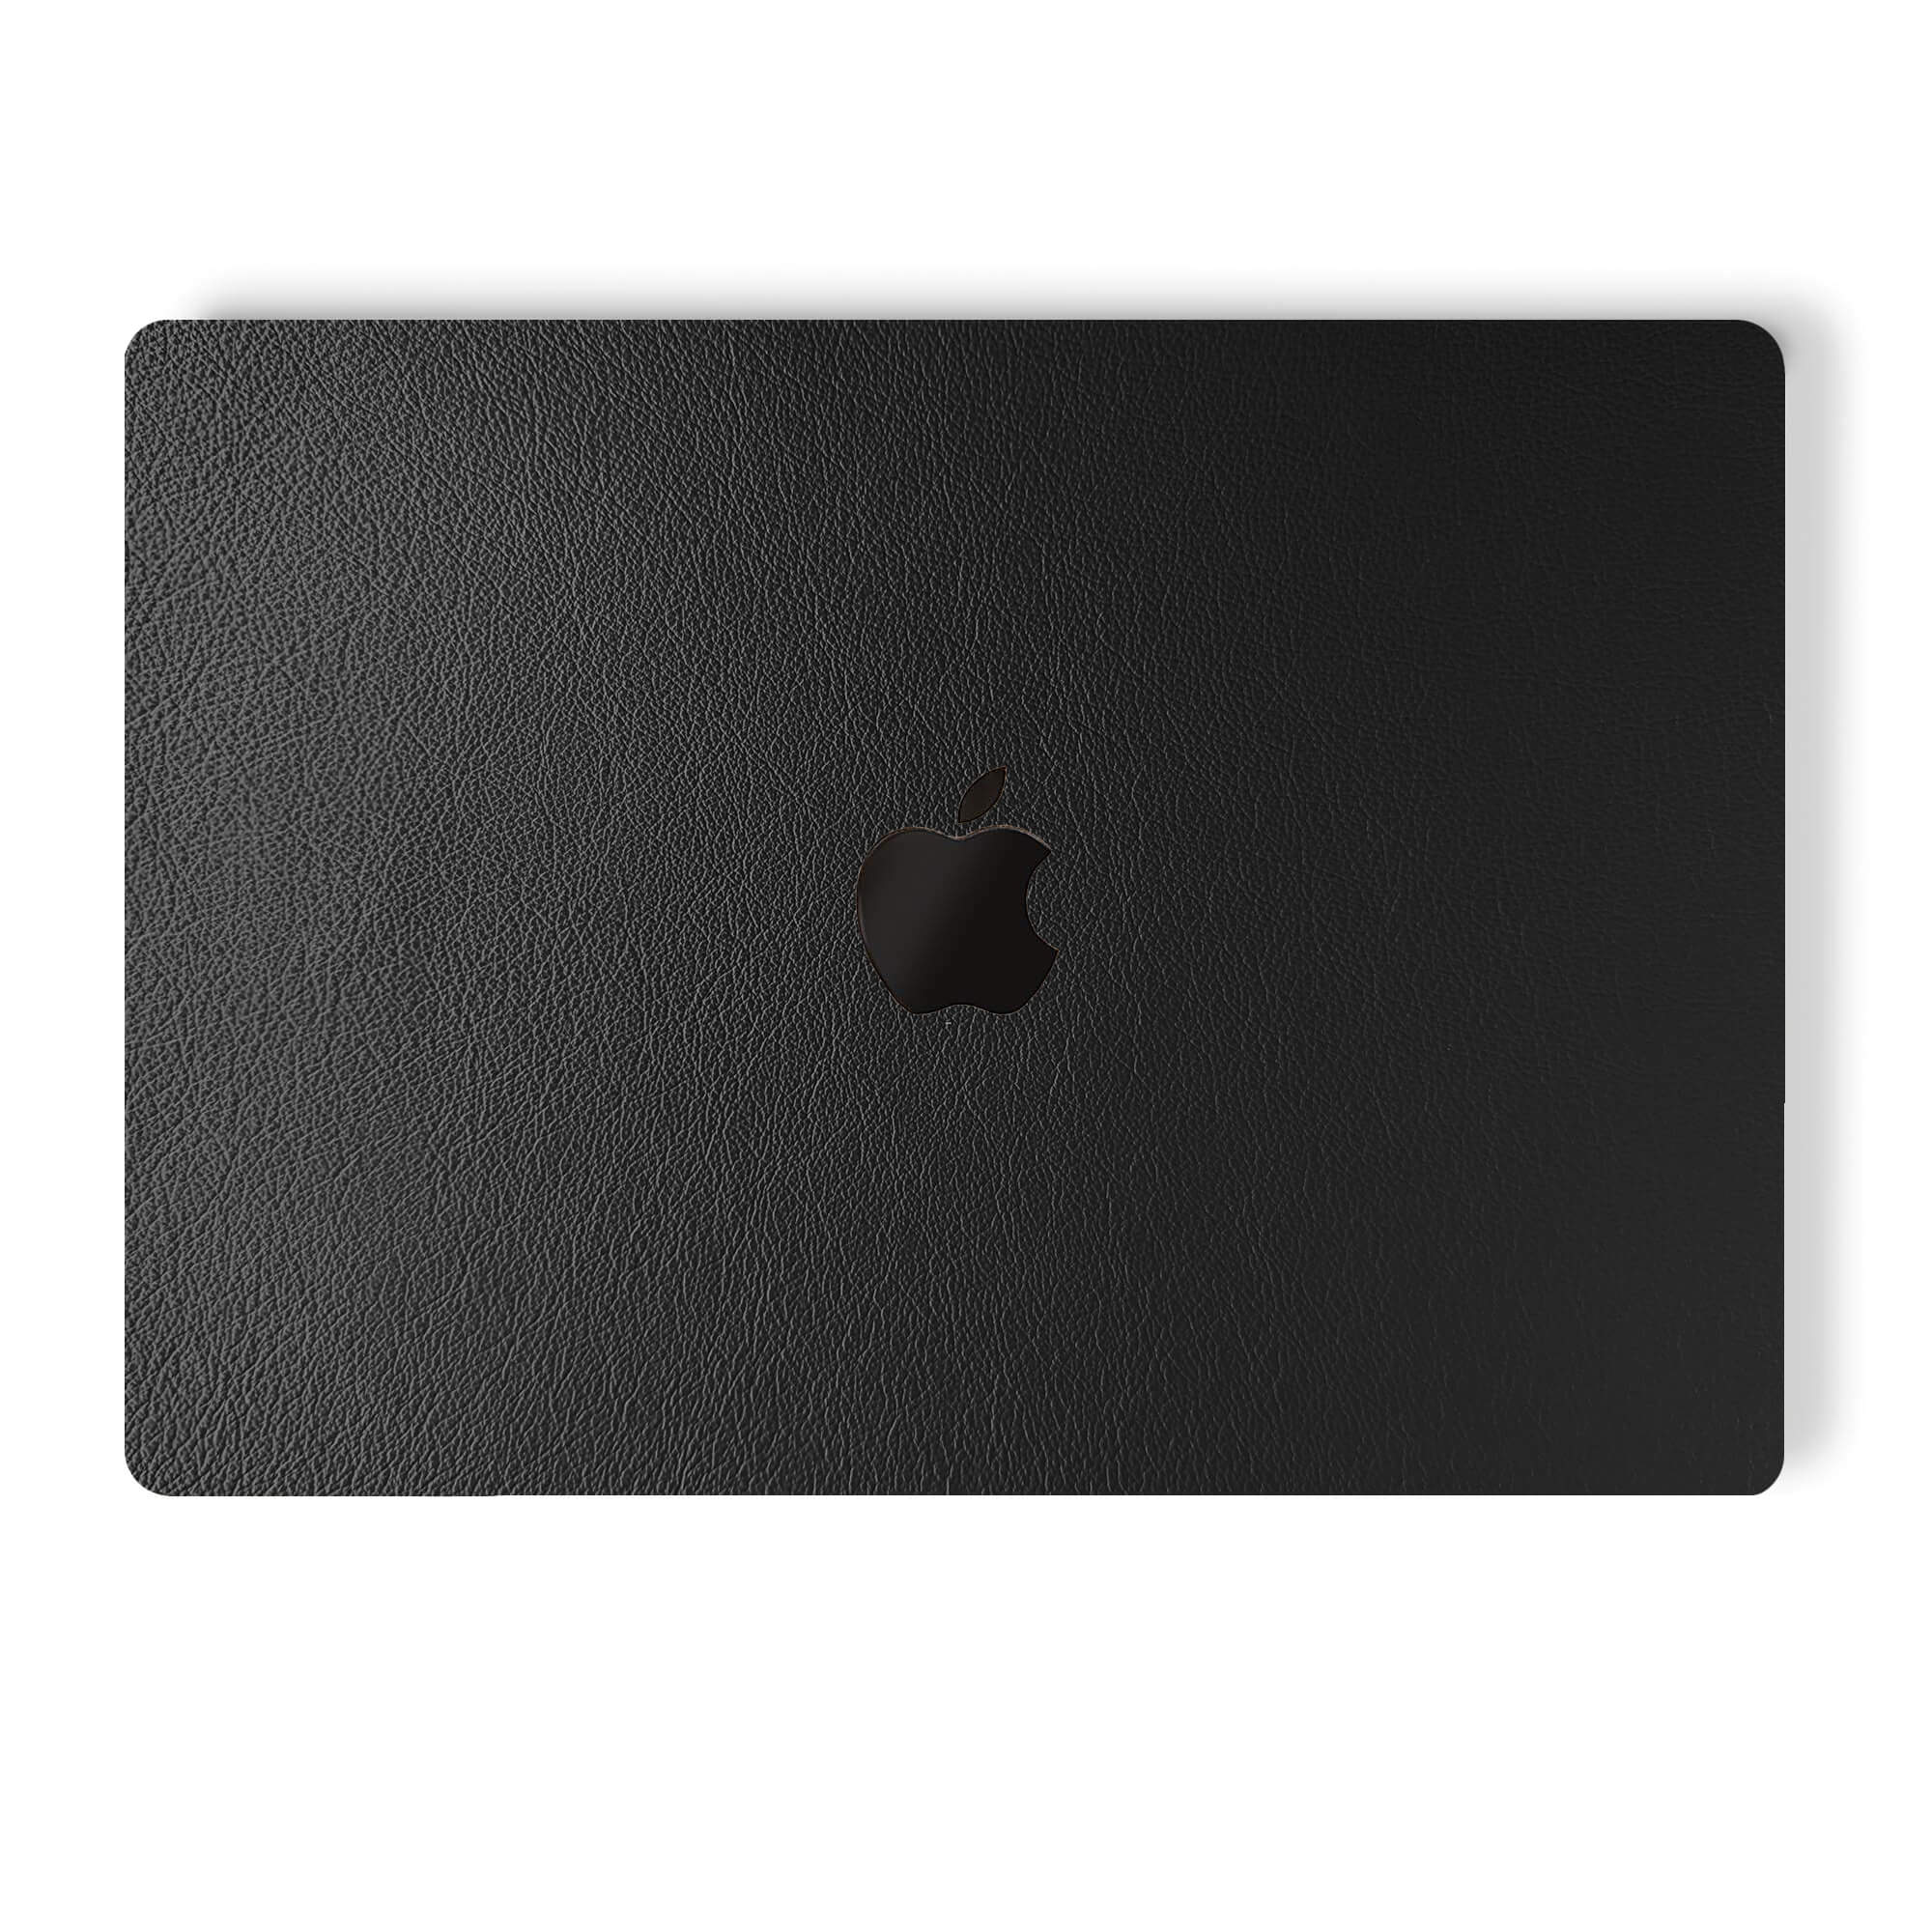 Black Crocodile Style MacBook Cover MacBook Air 13 Case Pro 